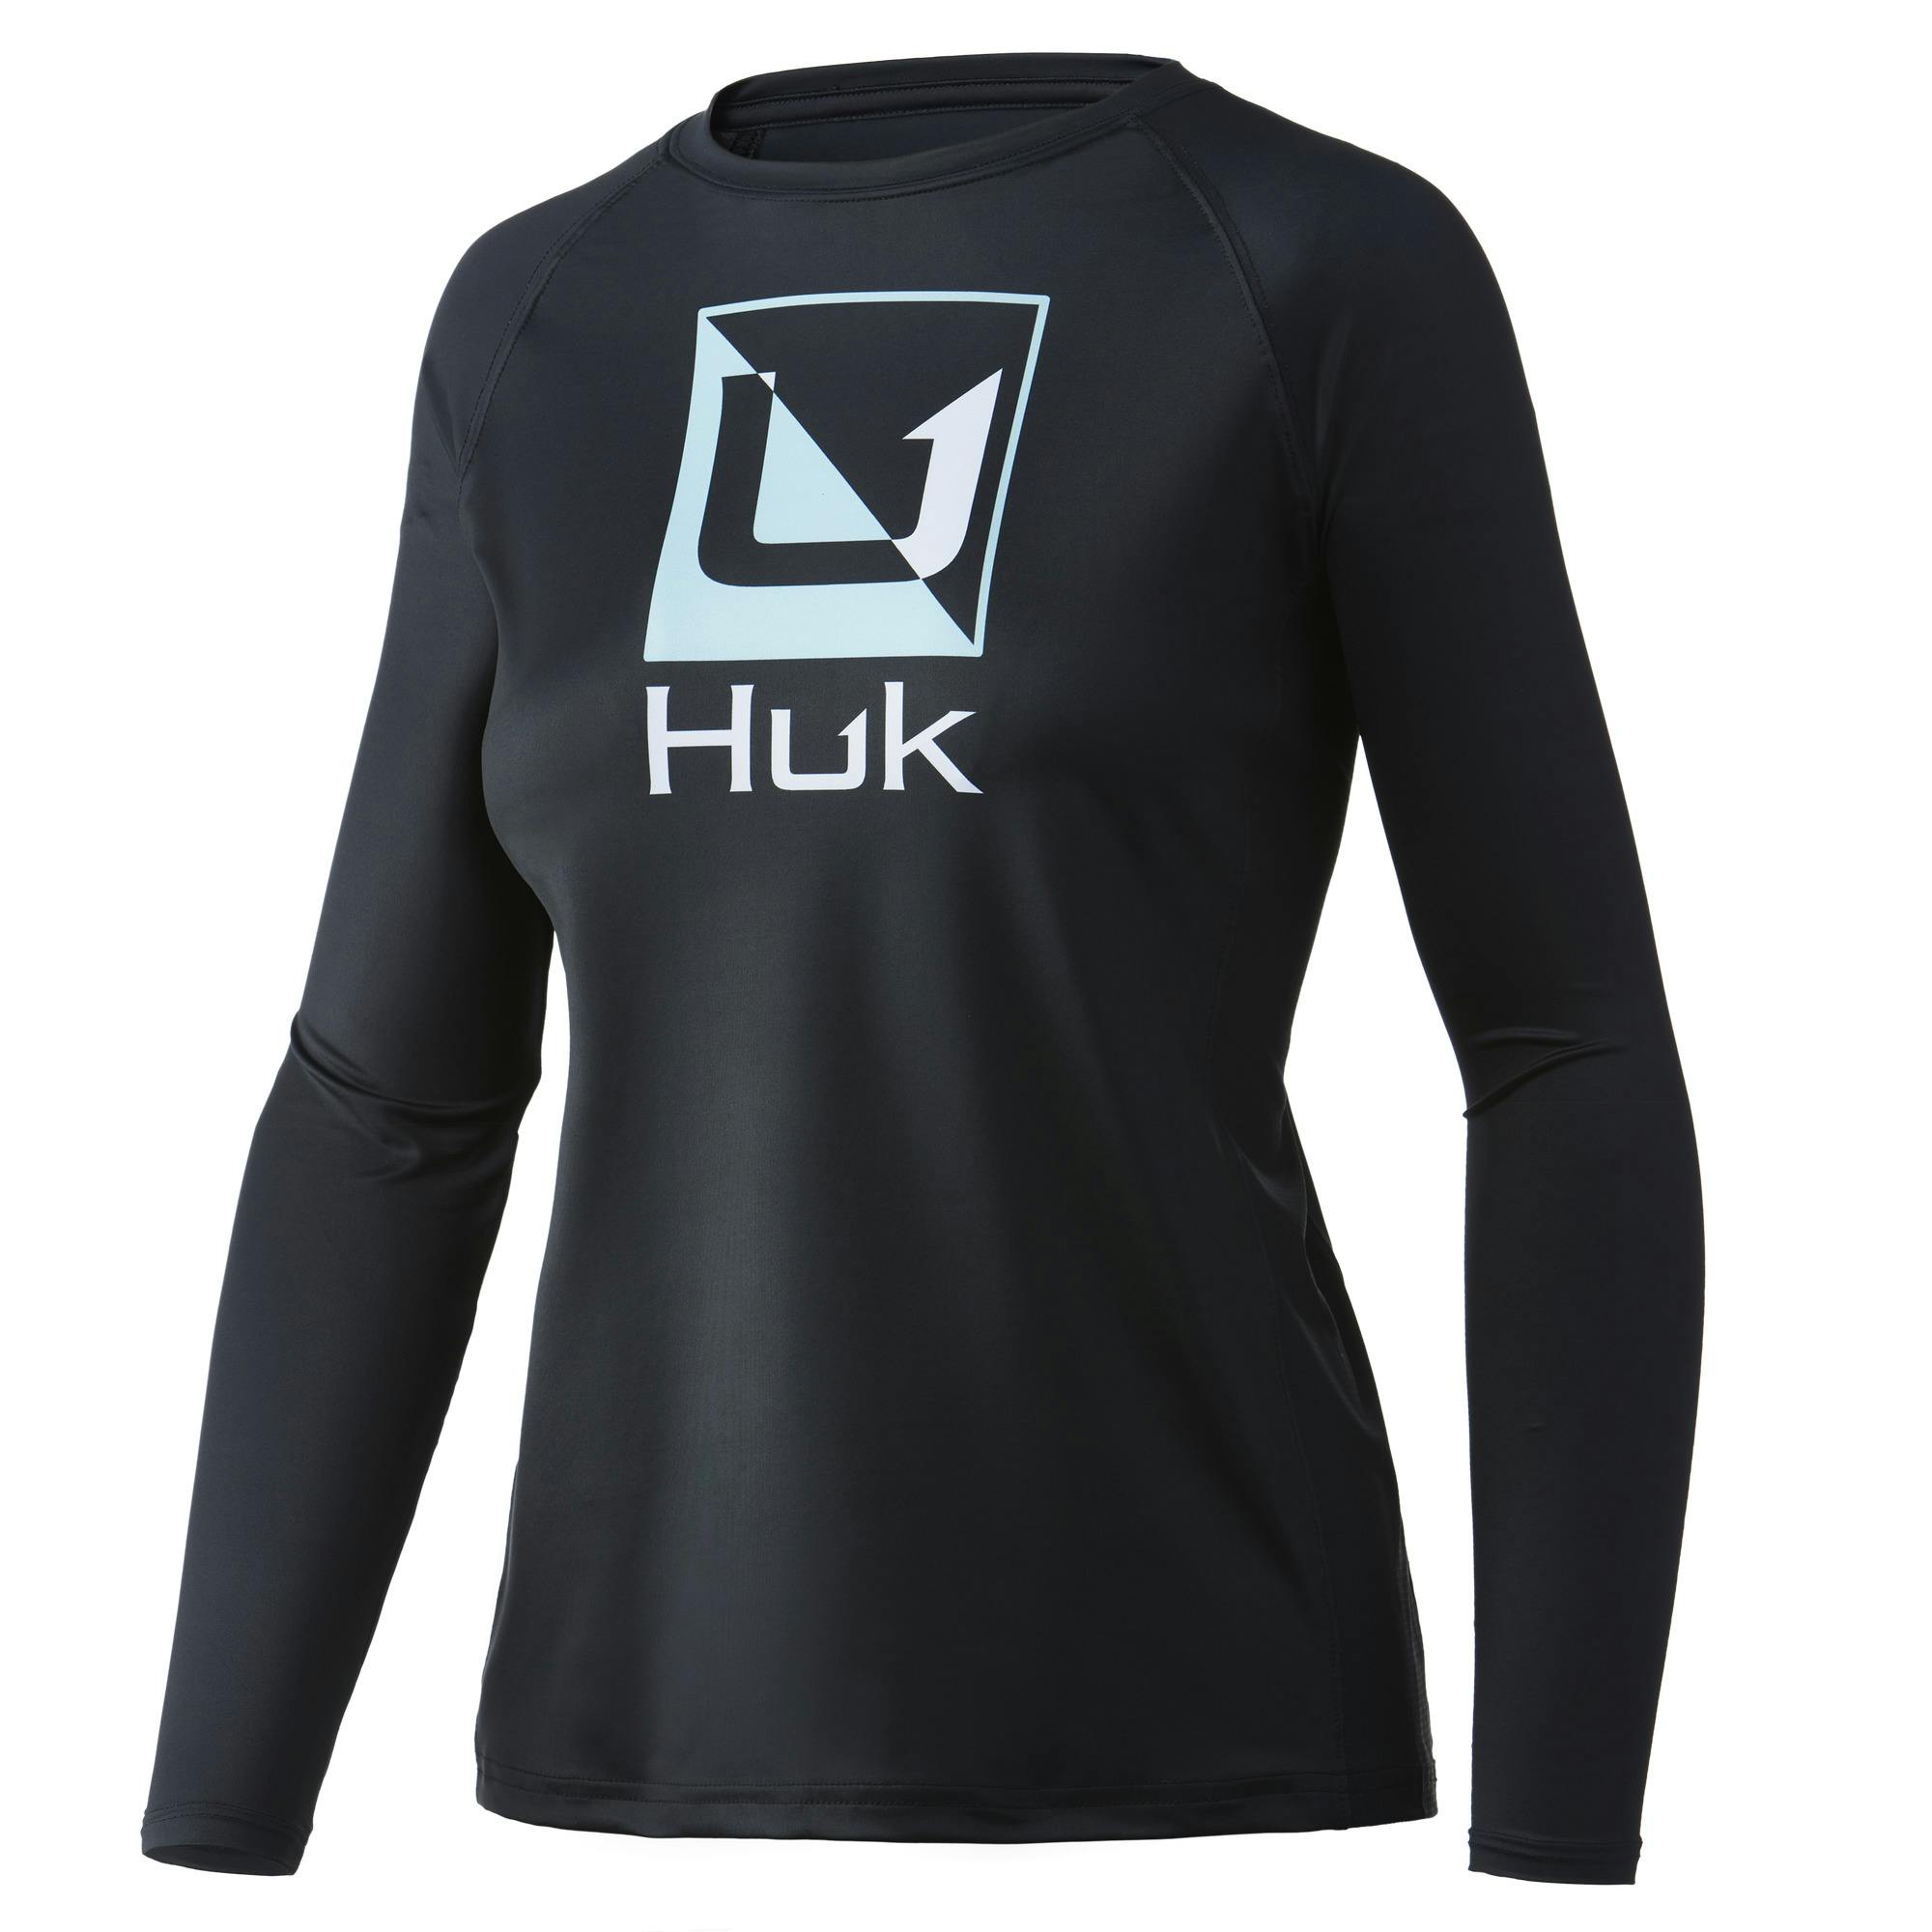 Huk Reflection Pursuit Long Sleeve Performance Shirt (Women's) Front - Black